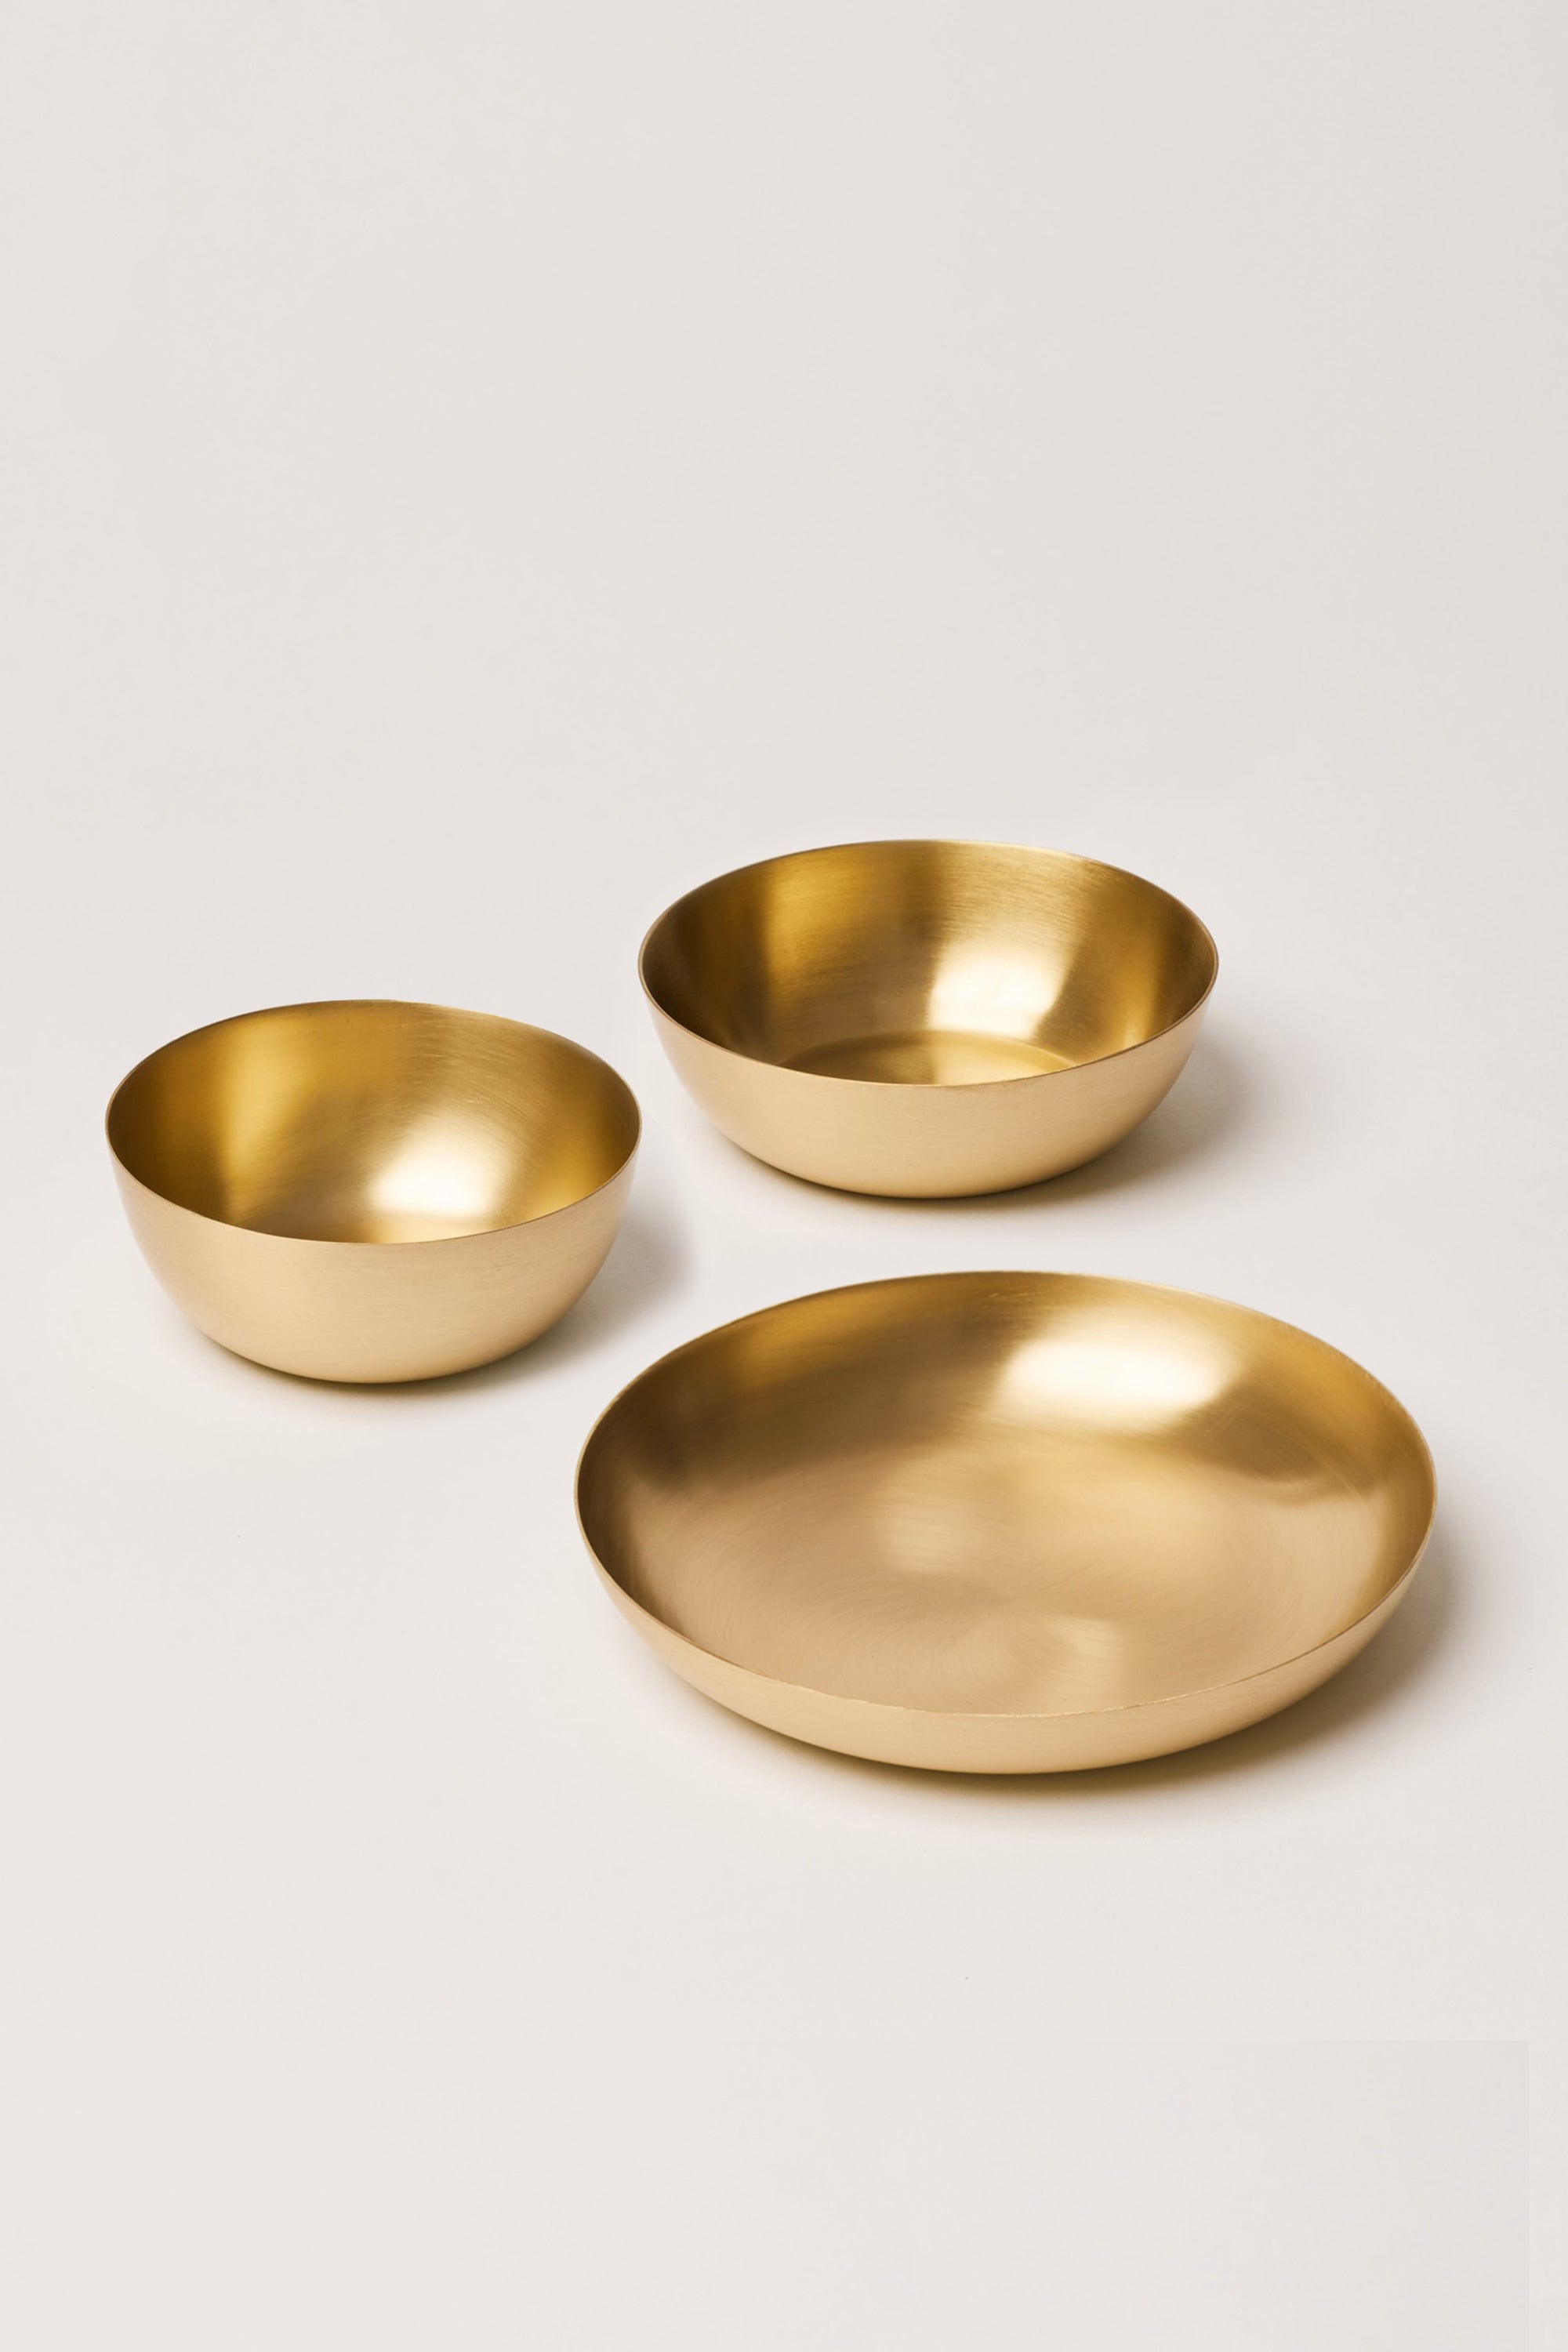 Heirloom Brass Bowls, Set of 3 - Fleck